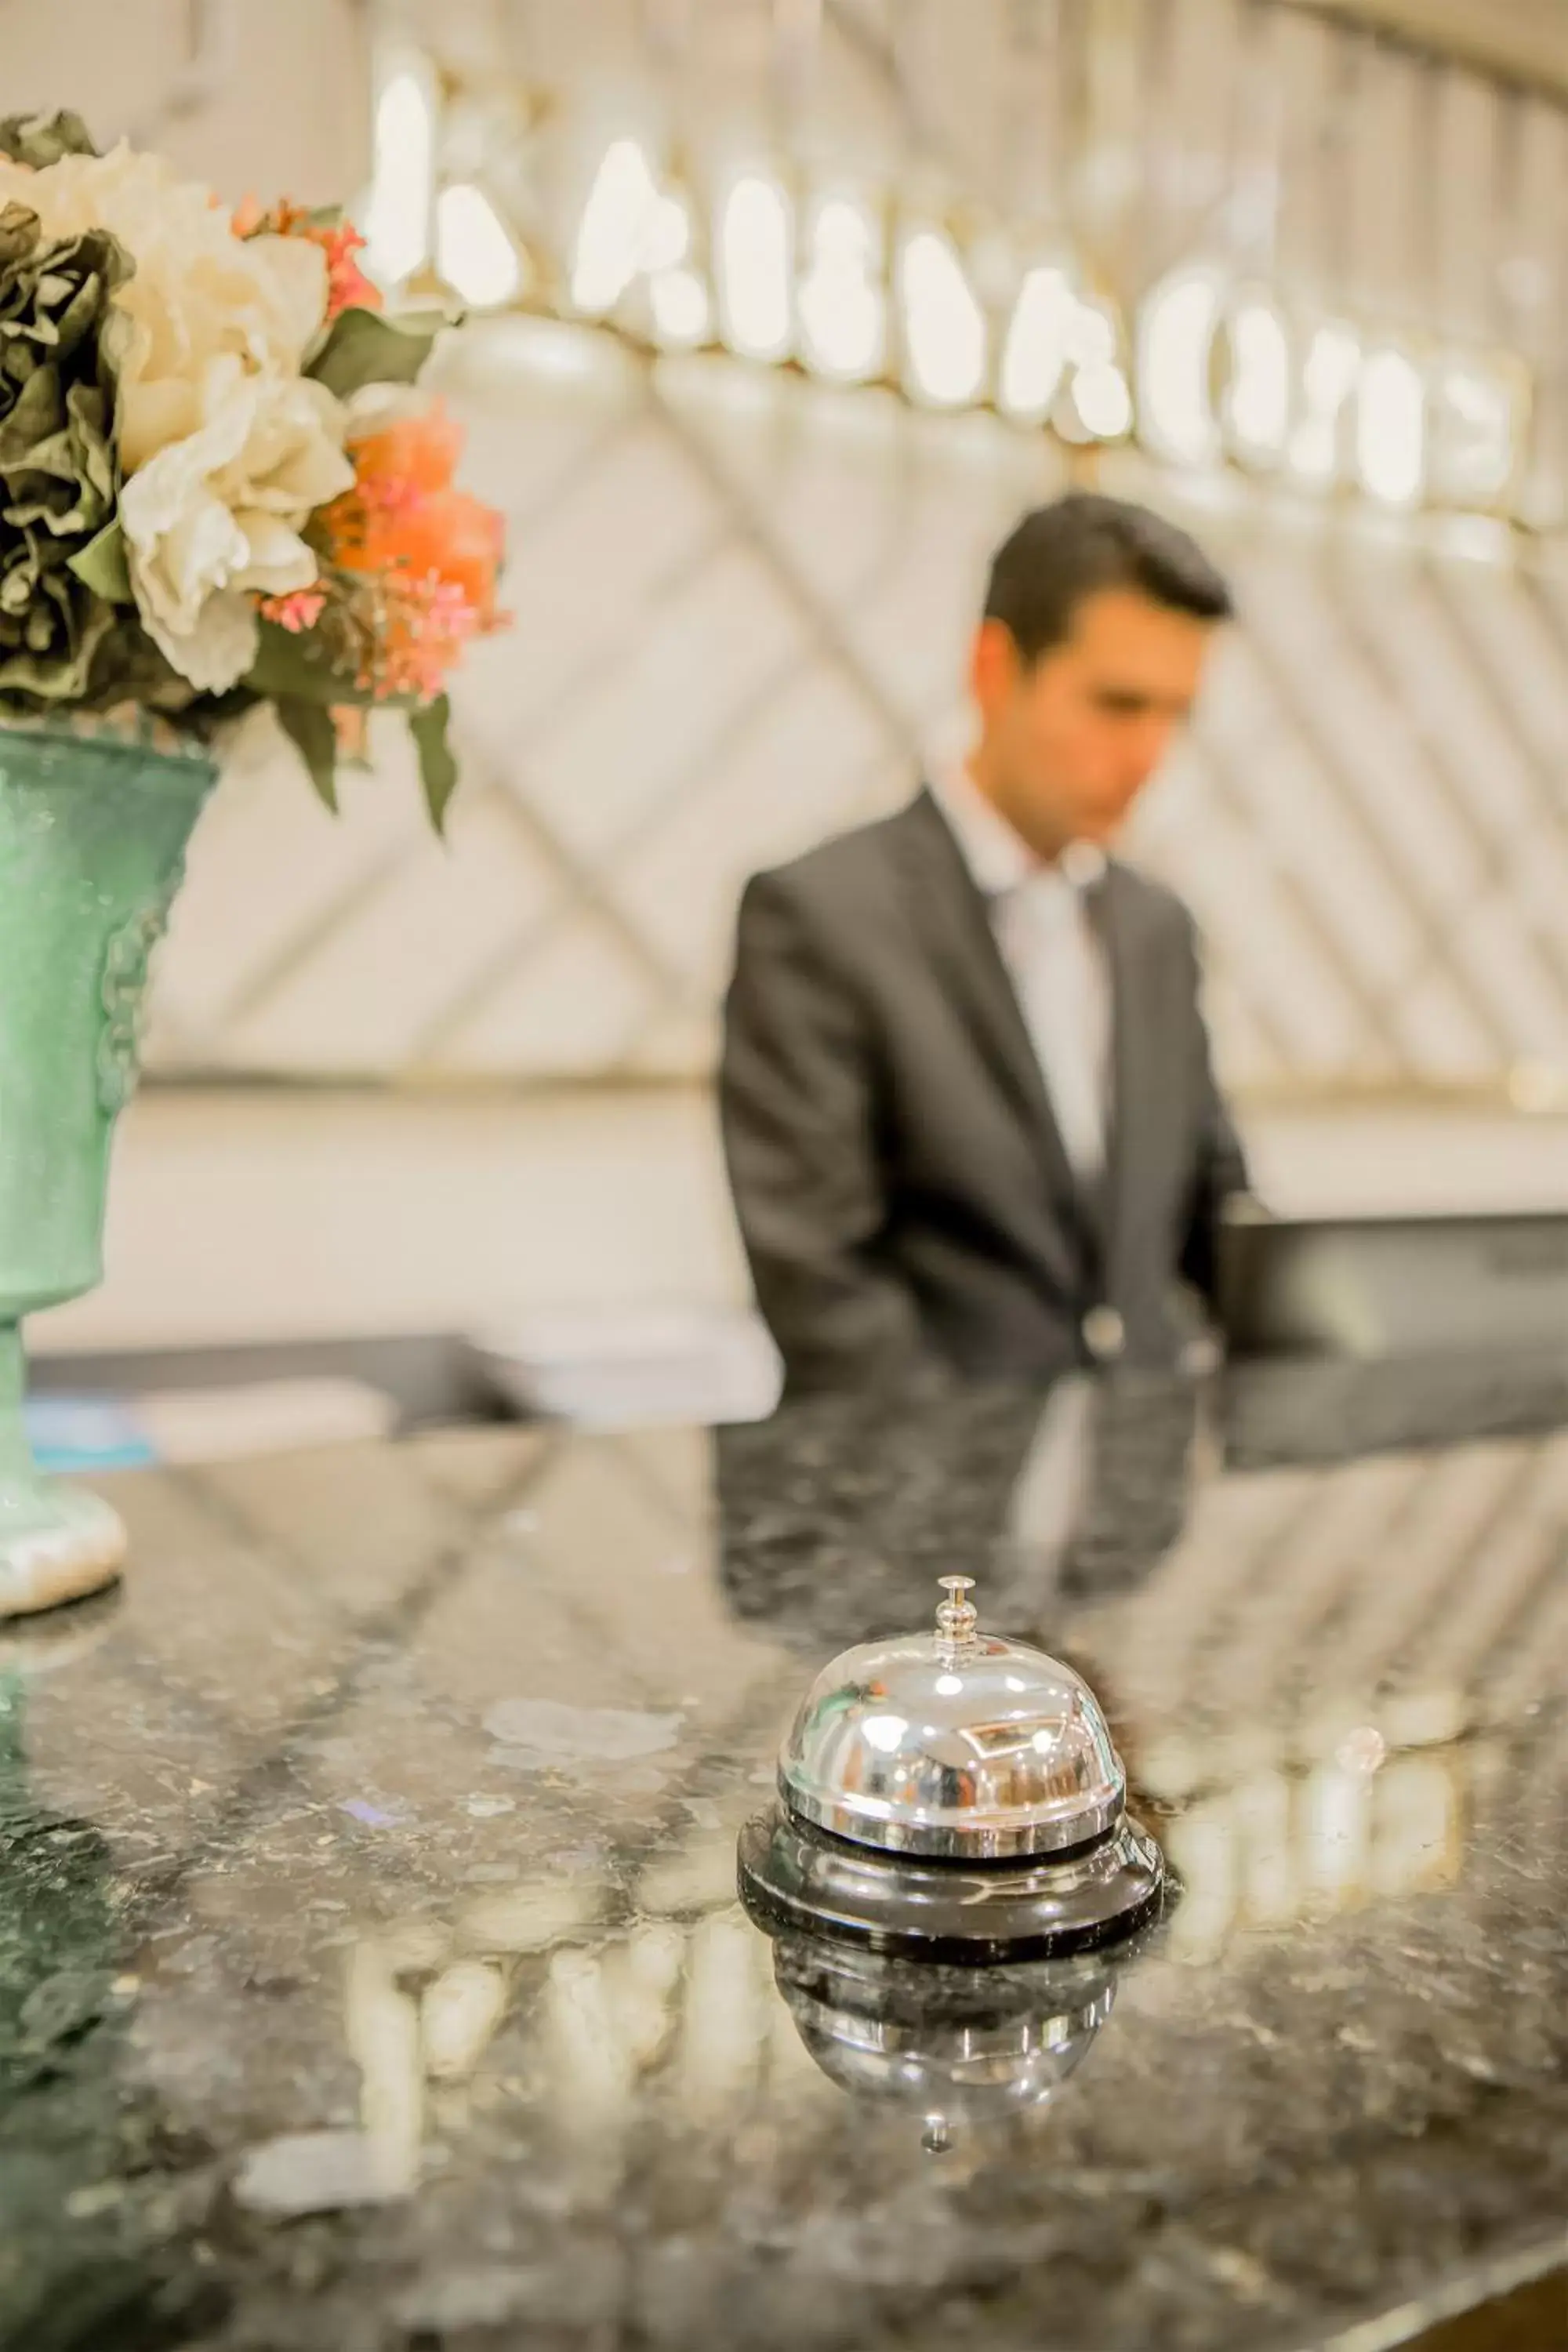 Lobby or reception in Kahya Hotel Ankara